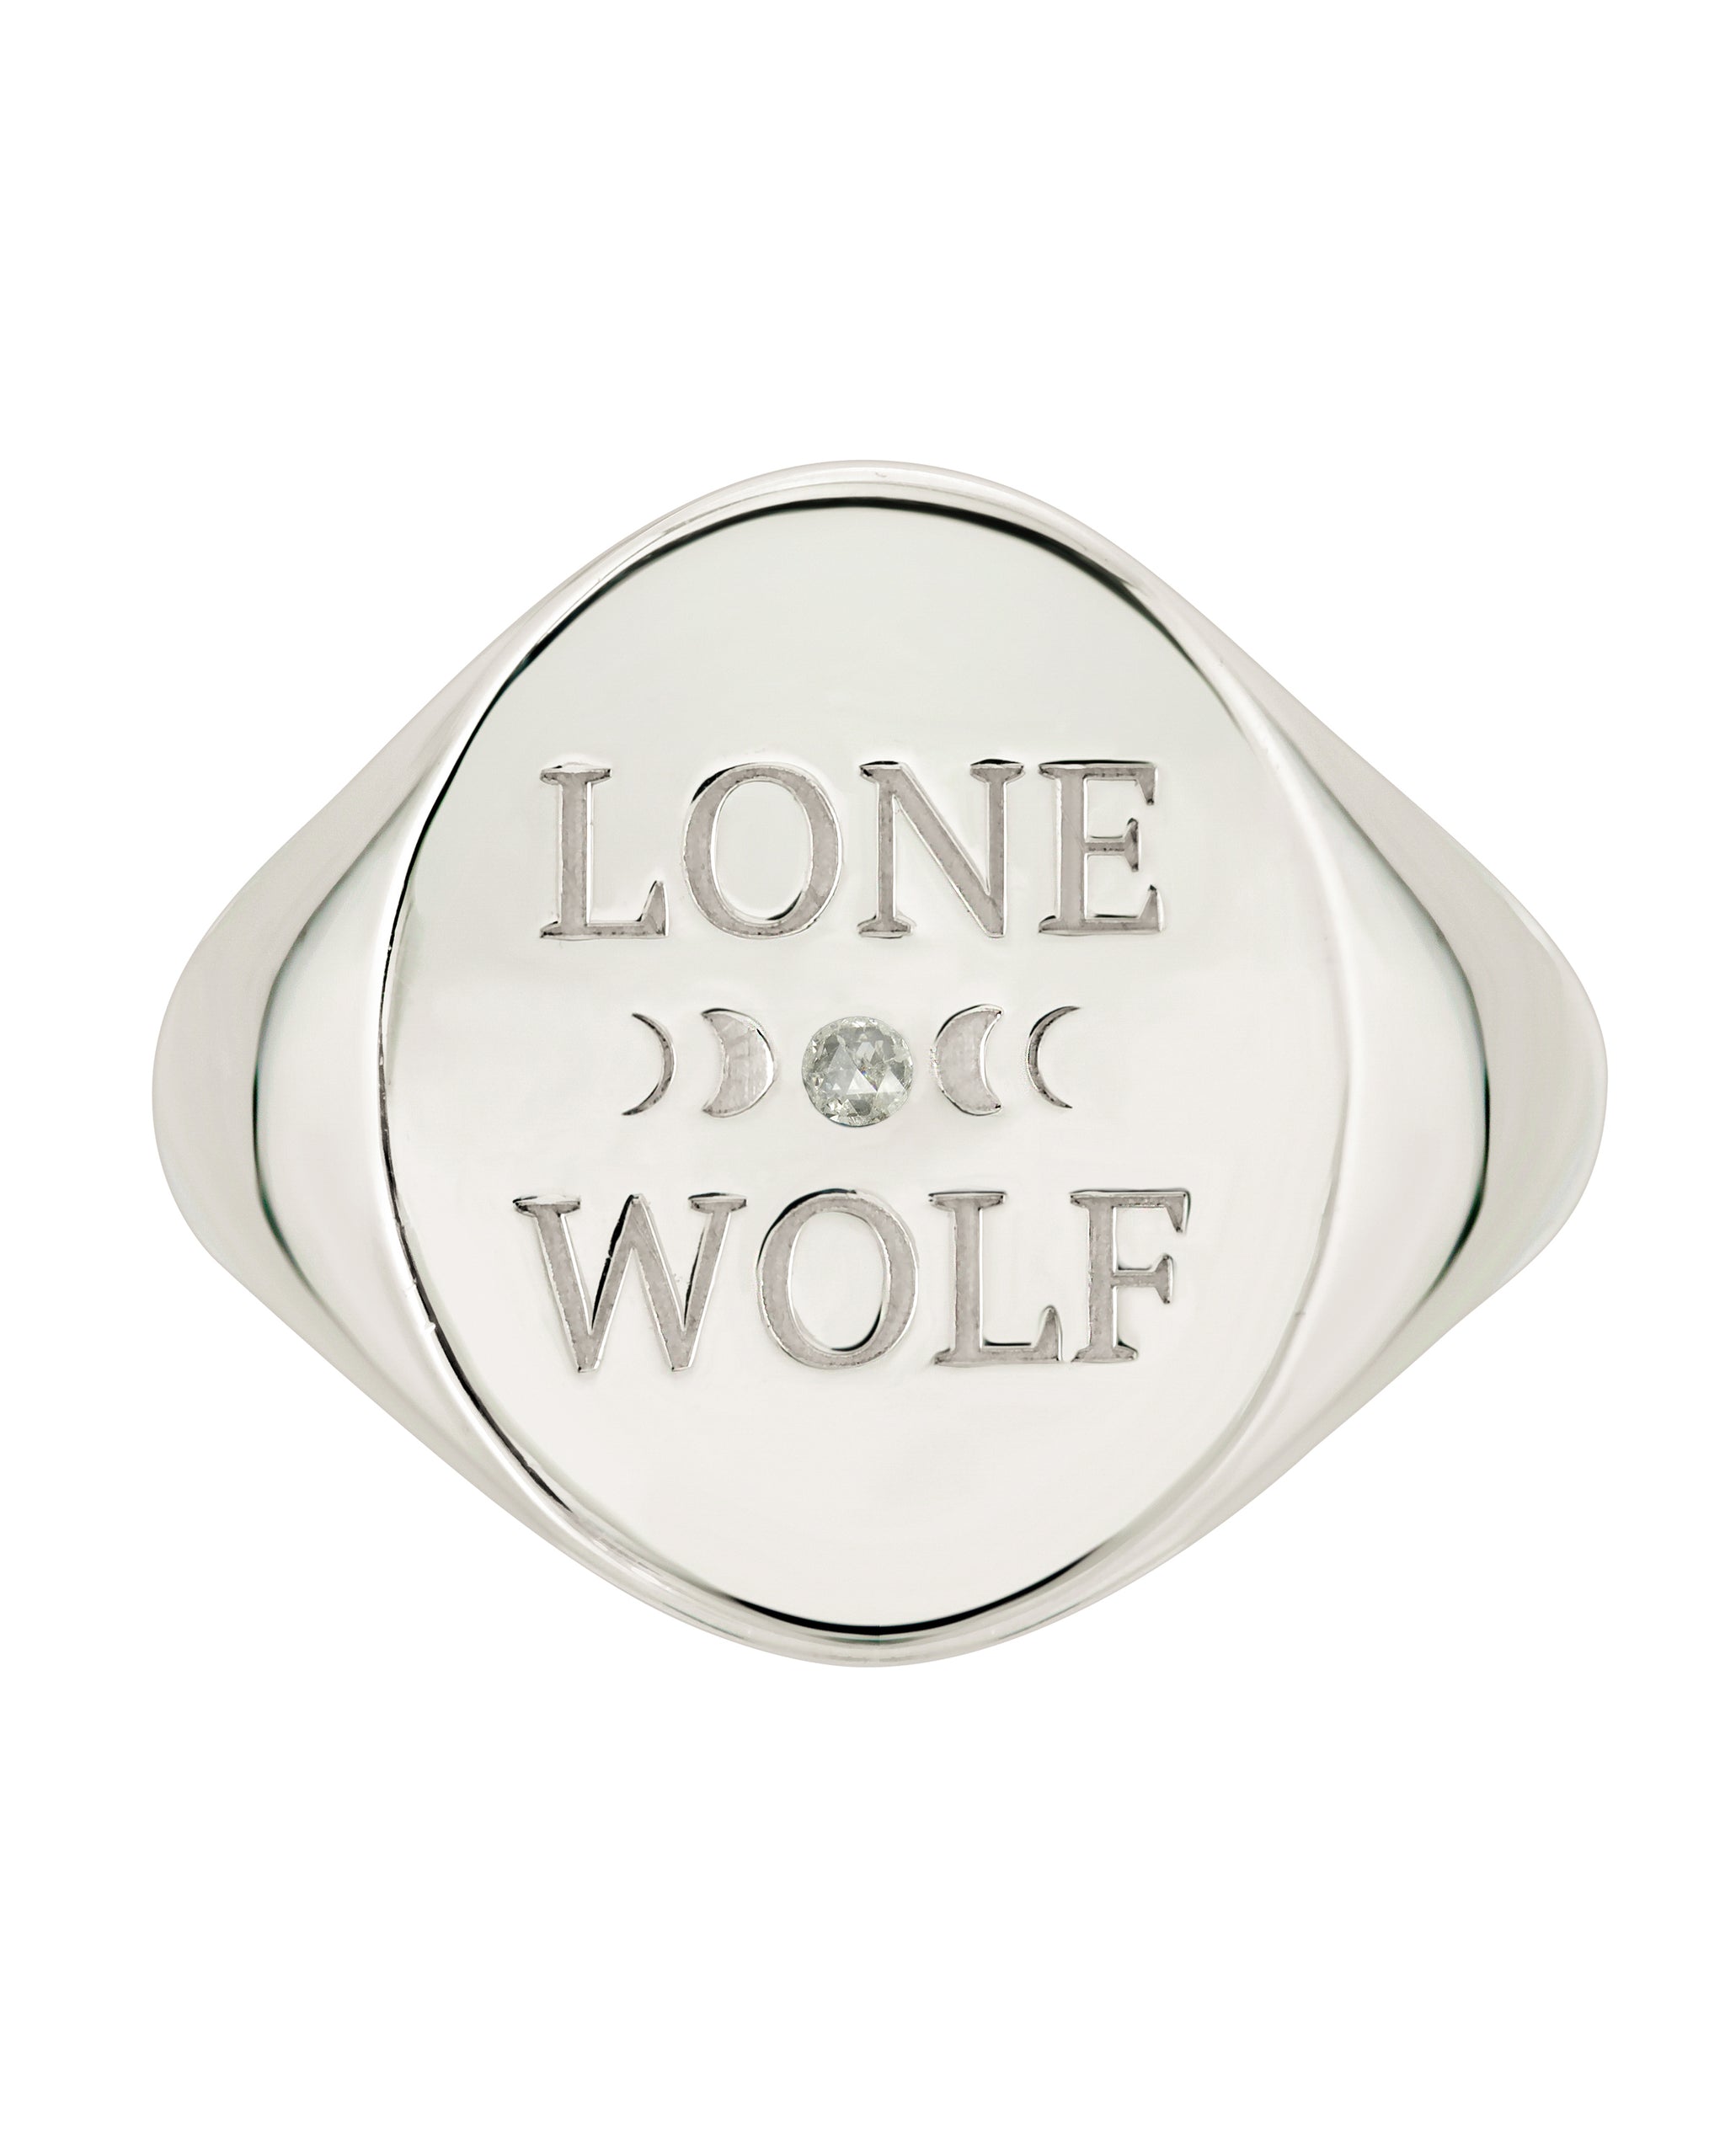 LONE WOLF WHITE TOPAZ RING